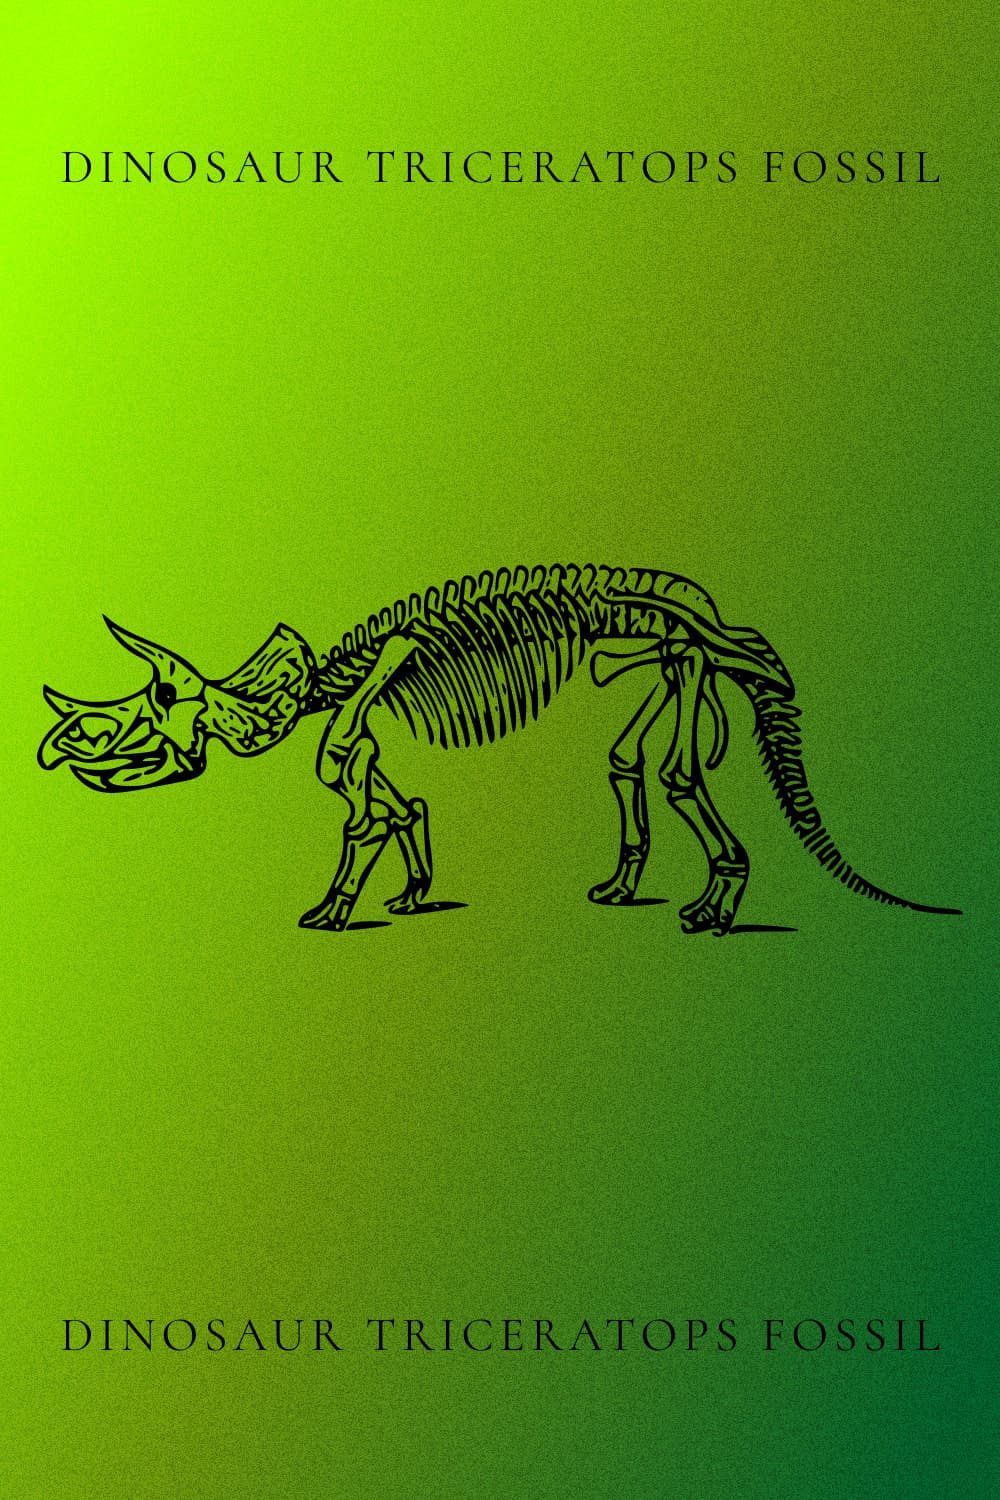 Dinosaur Triceratops Fossil - Pinterest Image.